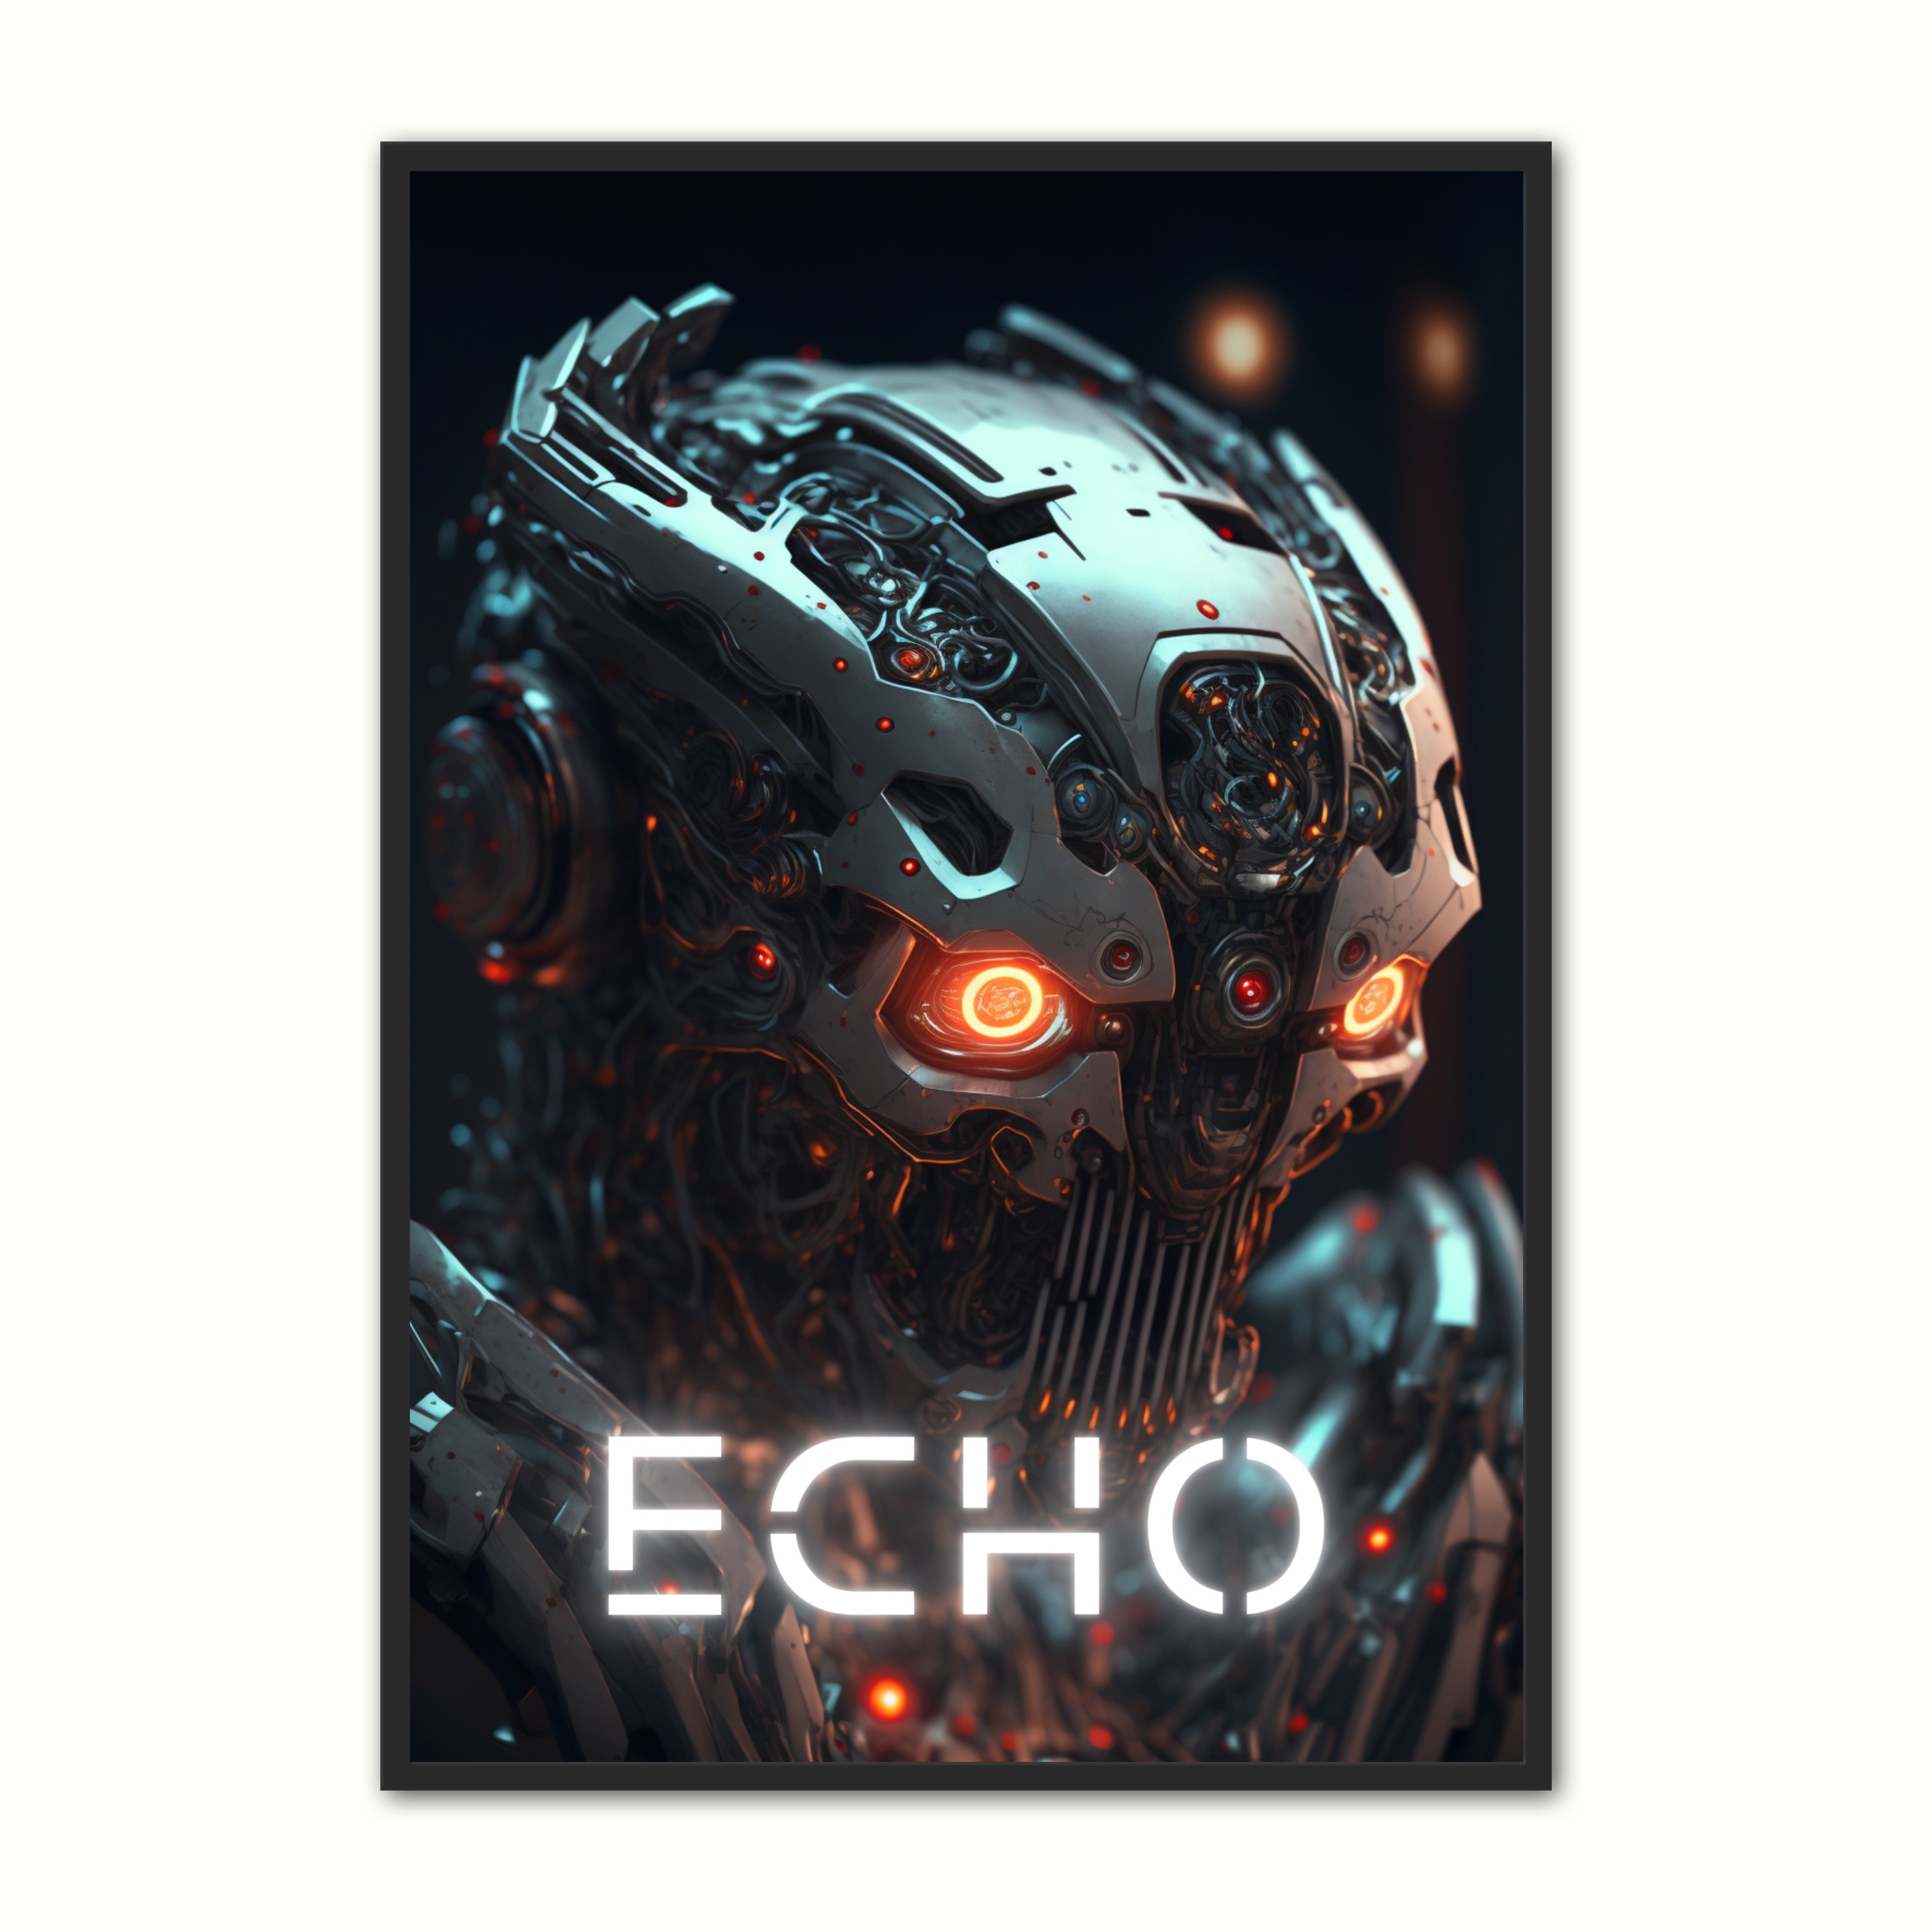 Se Plakat med Echo - Android 21 x 29,7 cm (A4) hos Nyplakat.dk